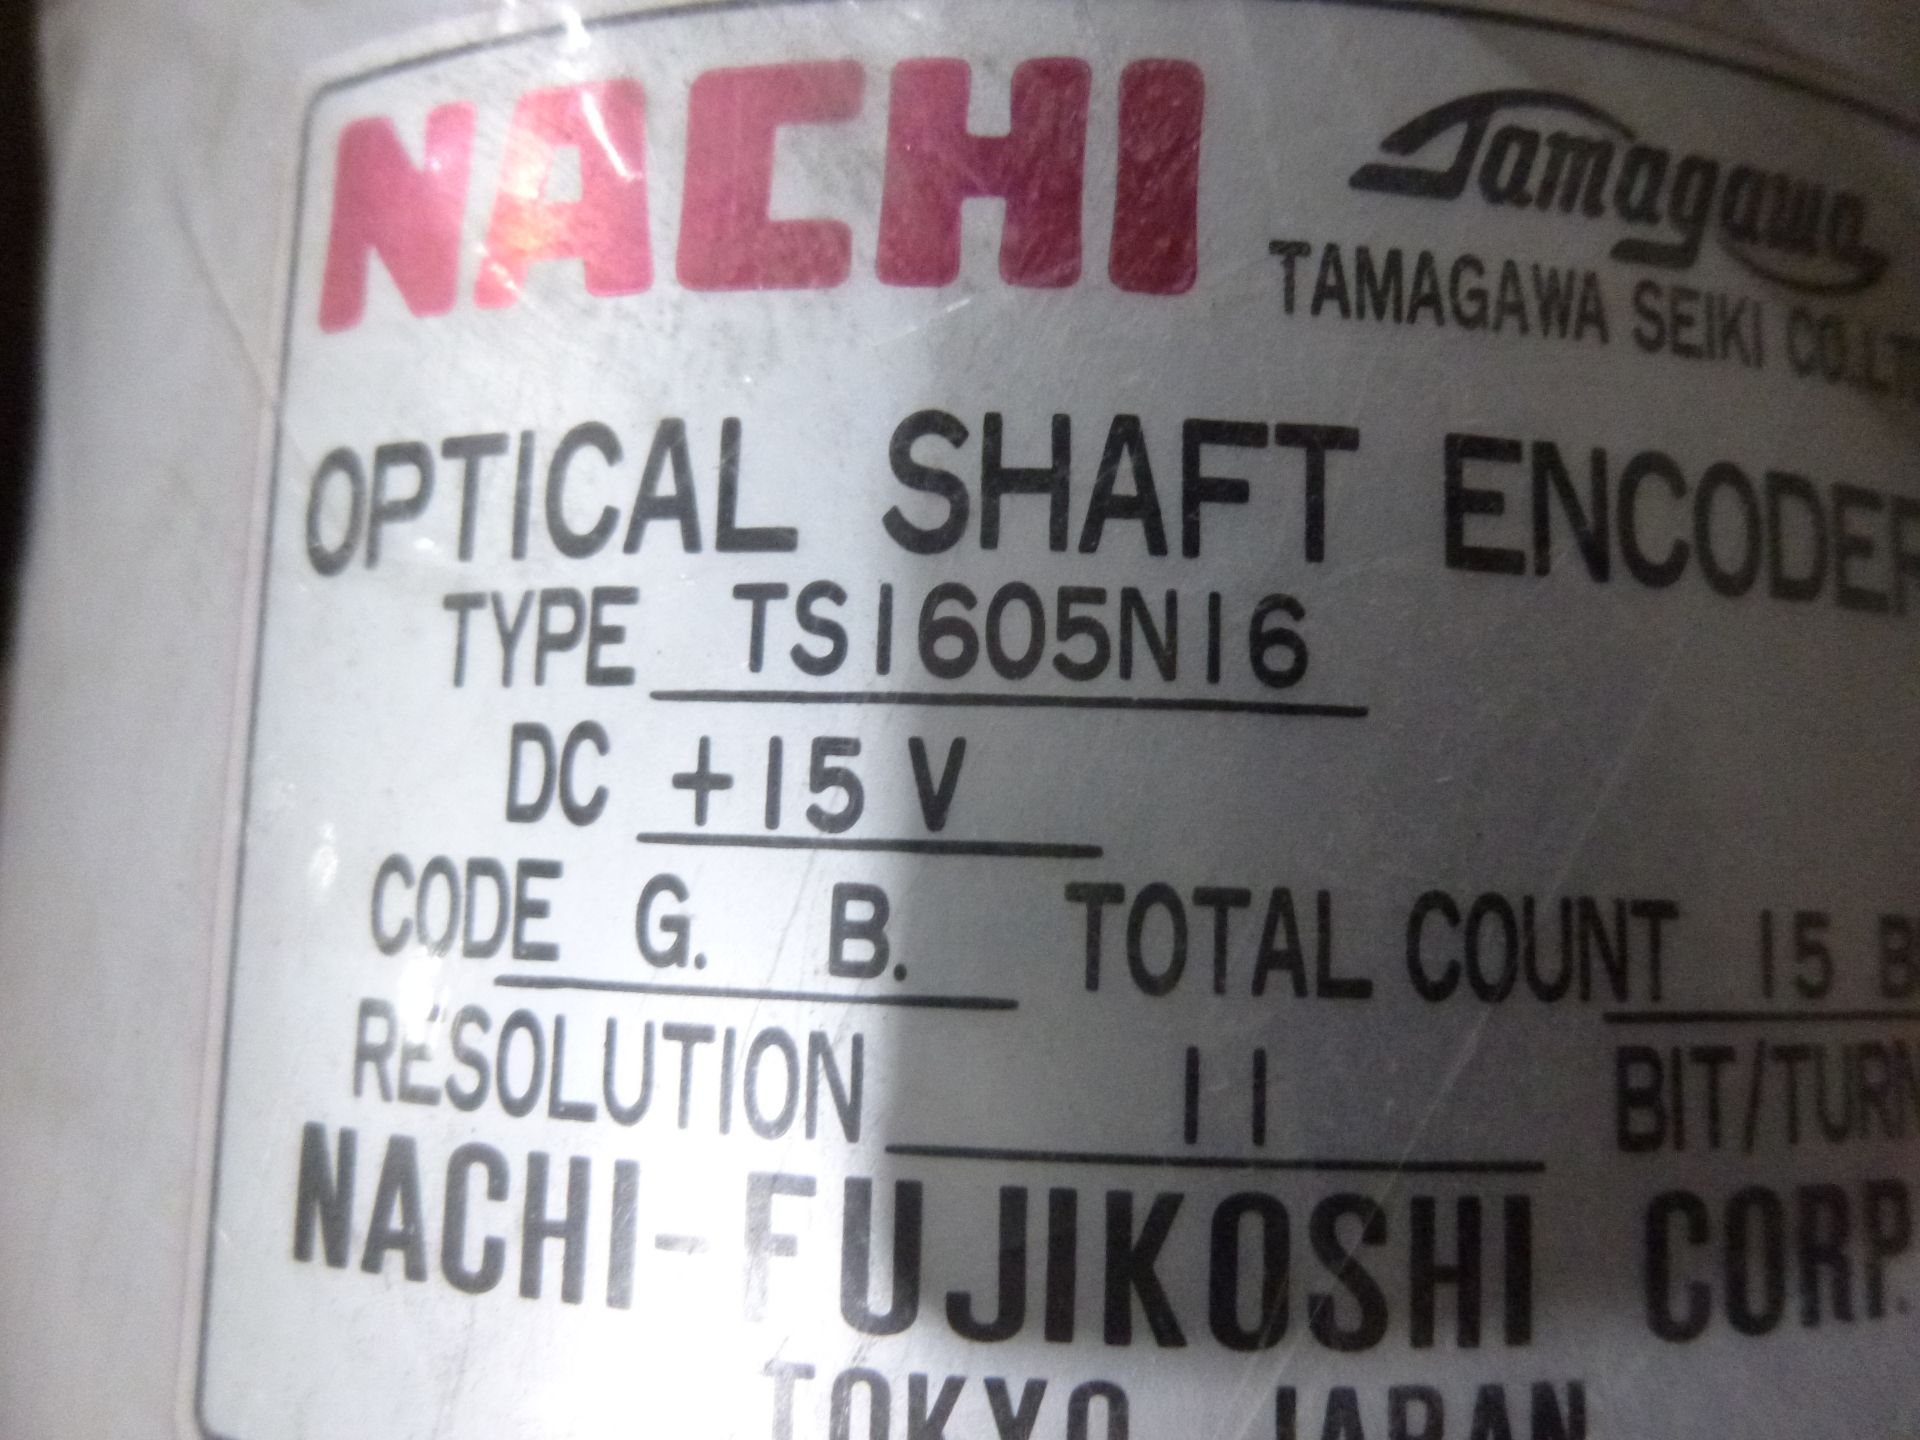 Nachi Tamagawa Seiki optical Shaft encoder type TS1605N16, as always with Brolyn LLC auctions, all - Image 2 of 2